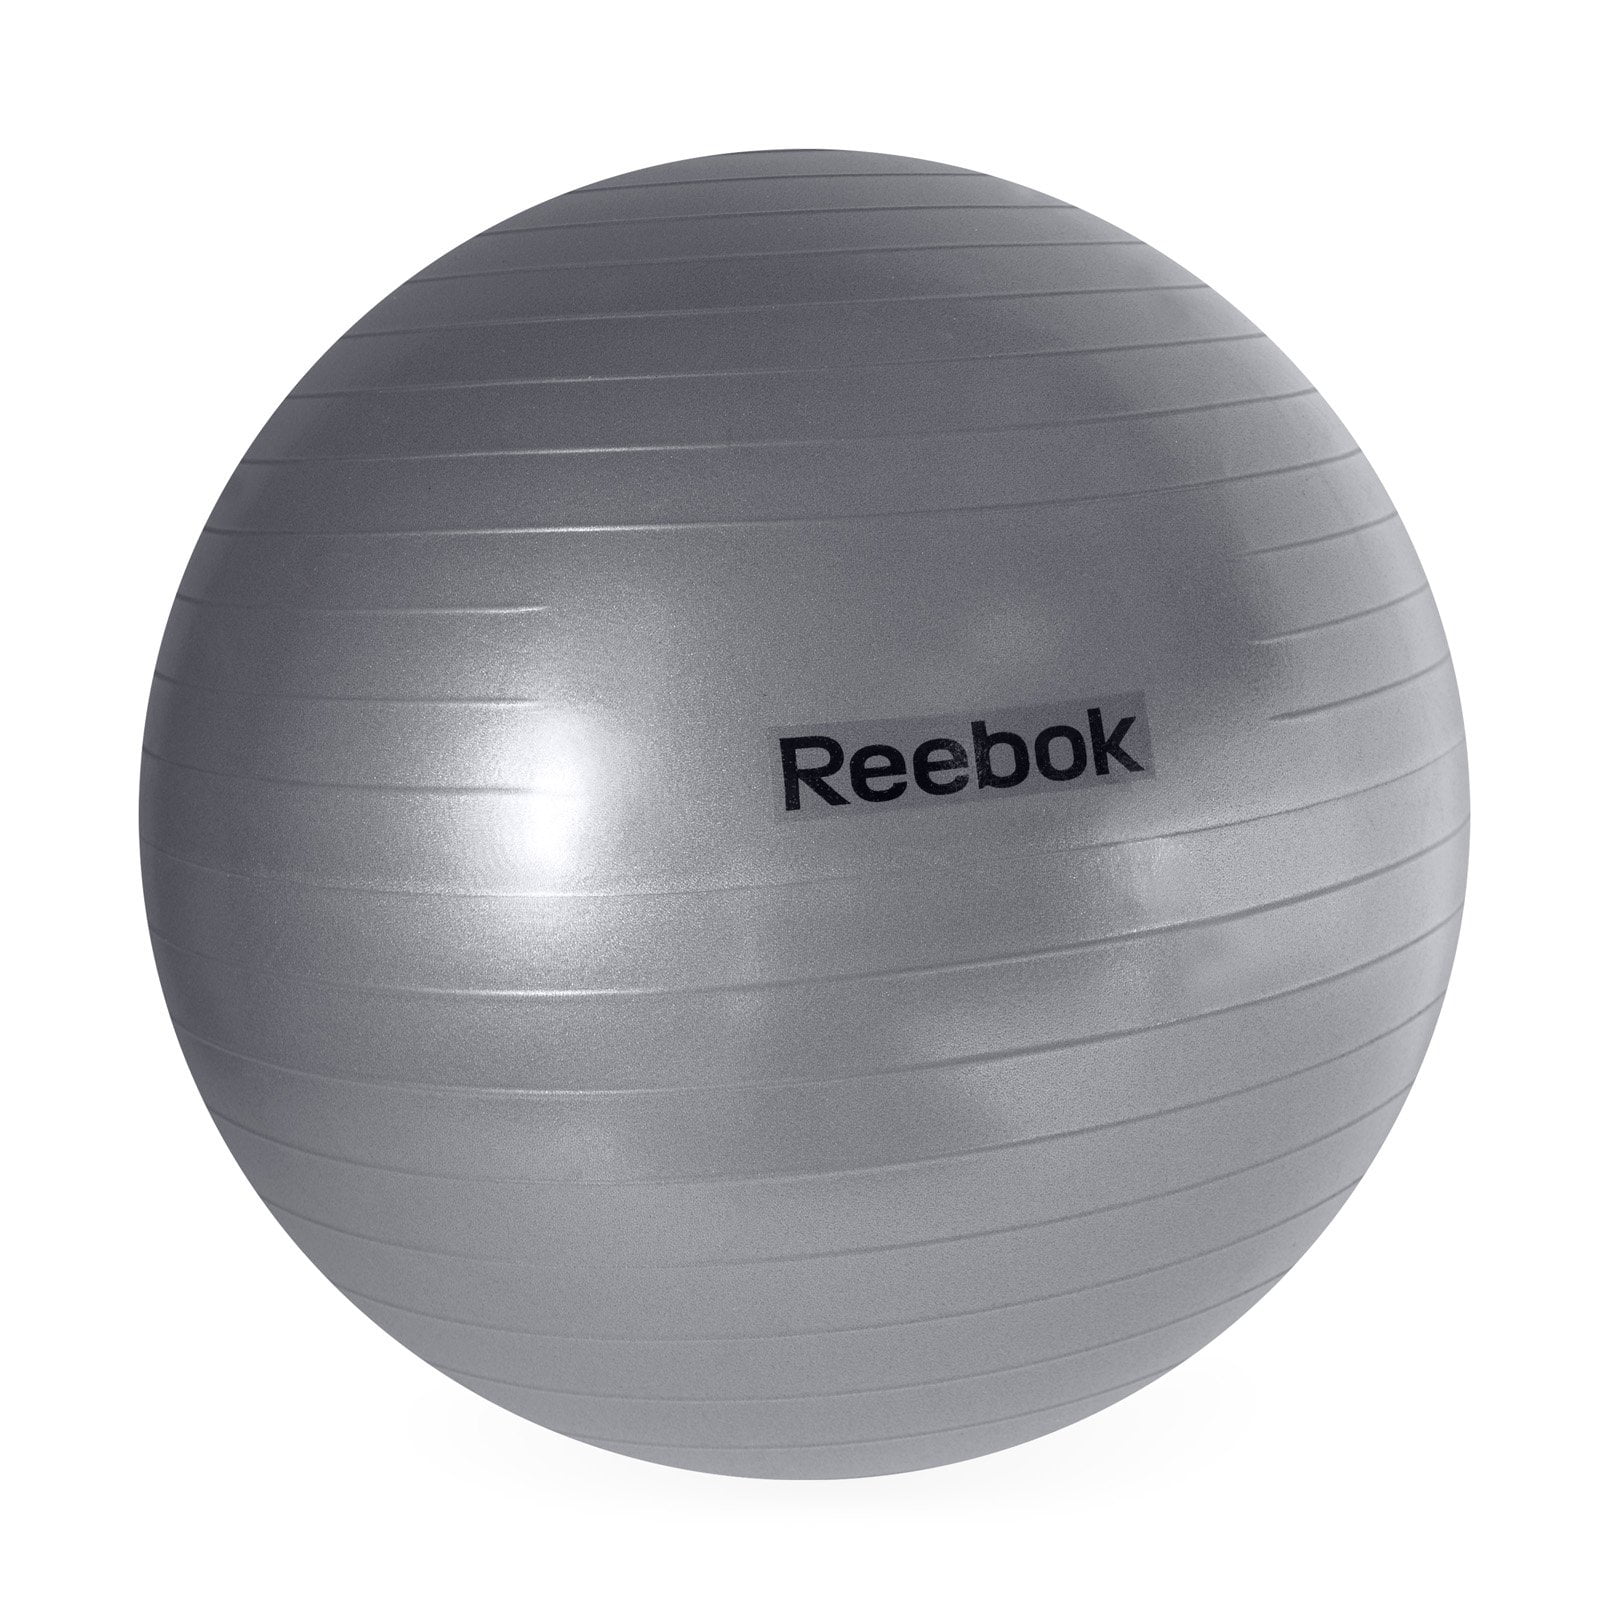 To detect Holdall Responsible person Reebok Gym Ball - Walmart.com